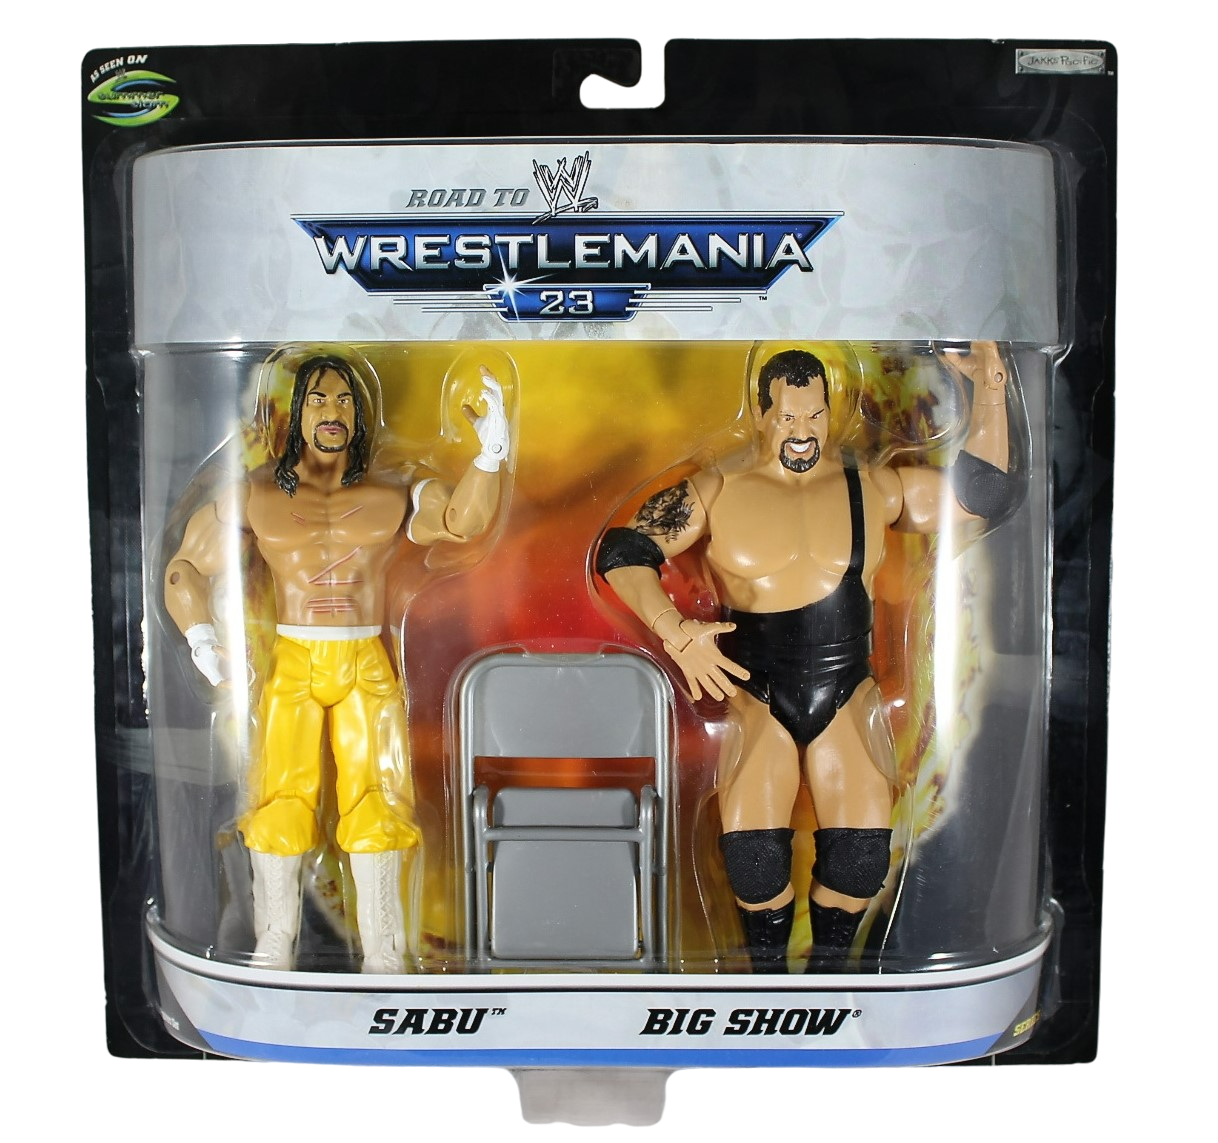 2006 WWE Jakks Pacific Ruthless Aggression Road to WrestleMania 23 2-Packs Series 1: Sabu & Big Show